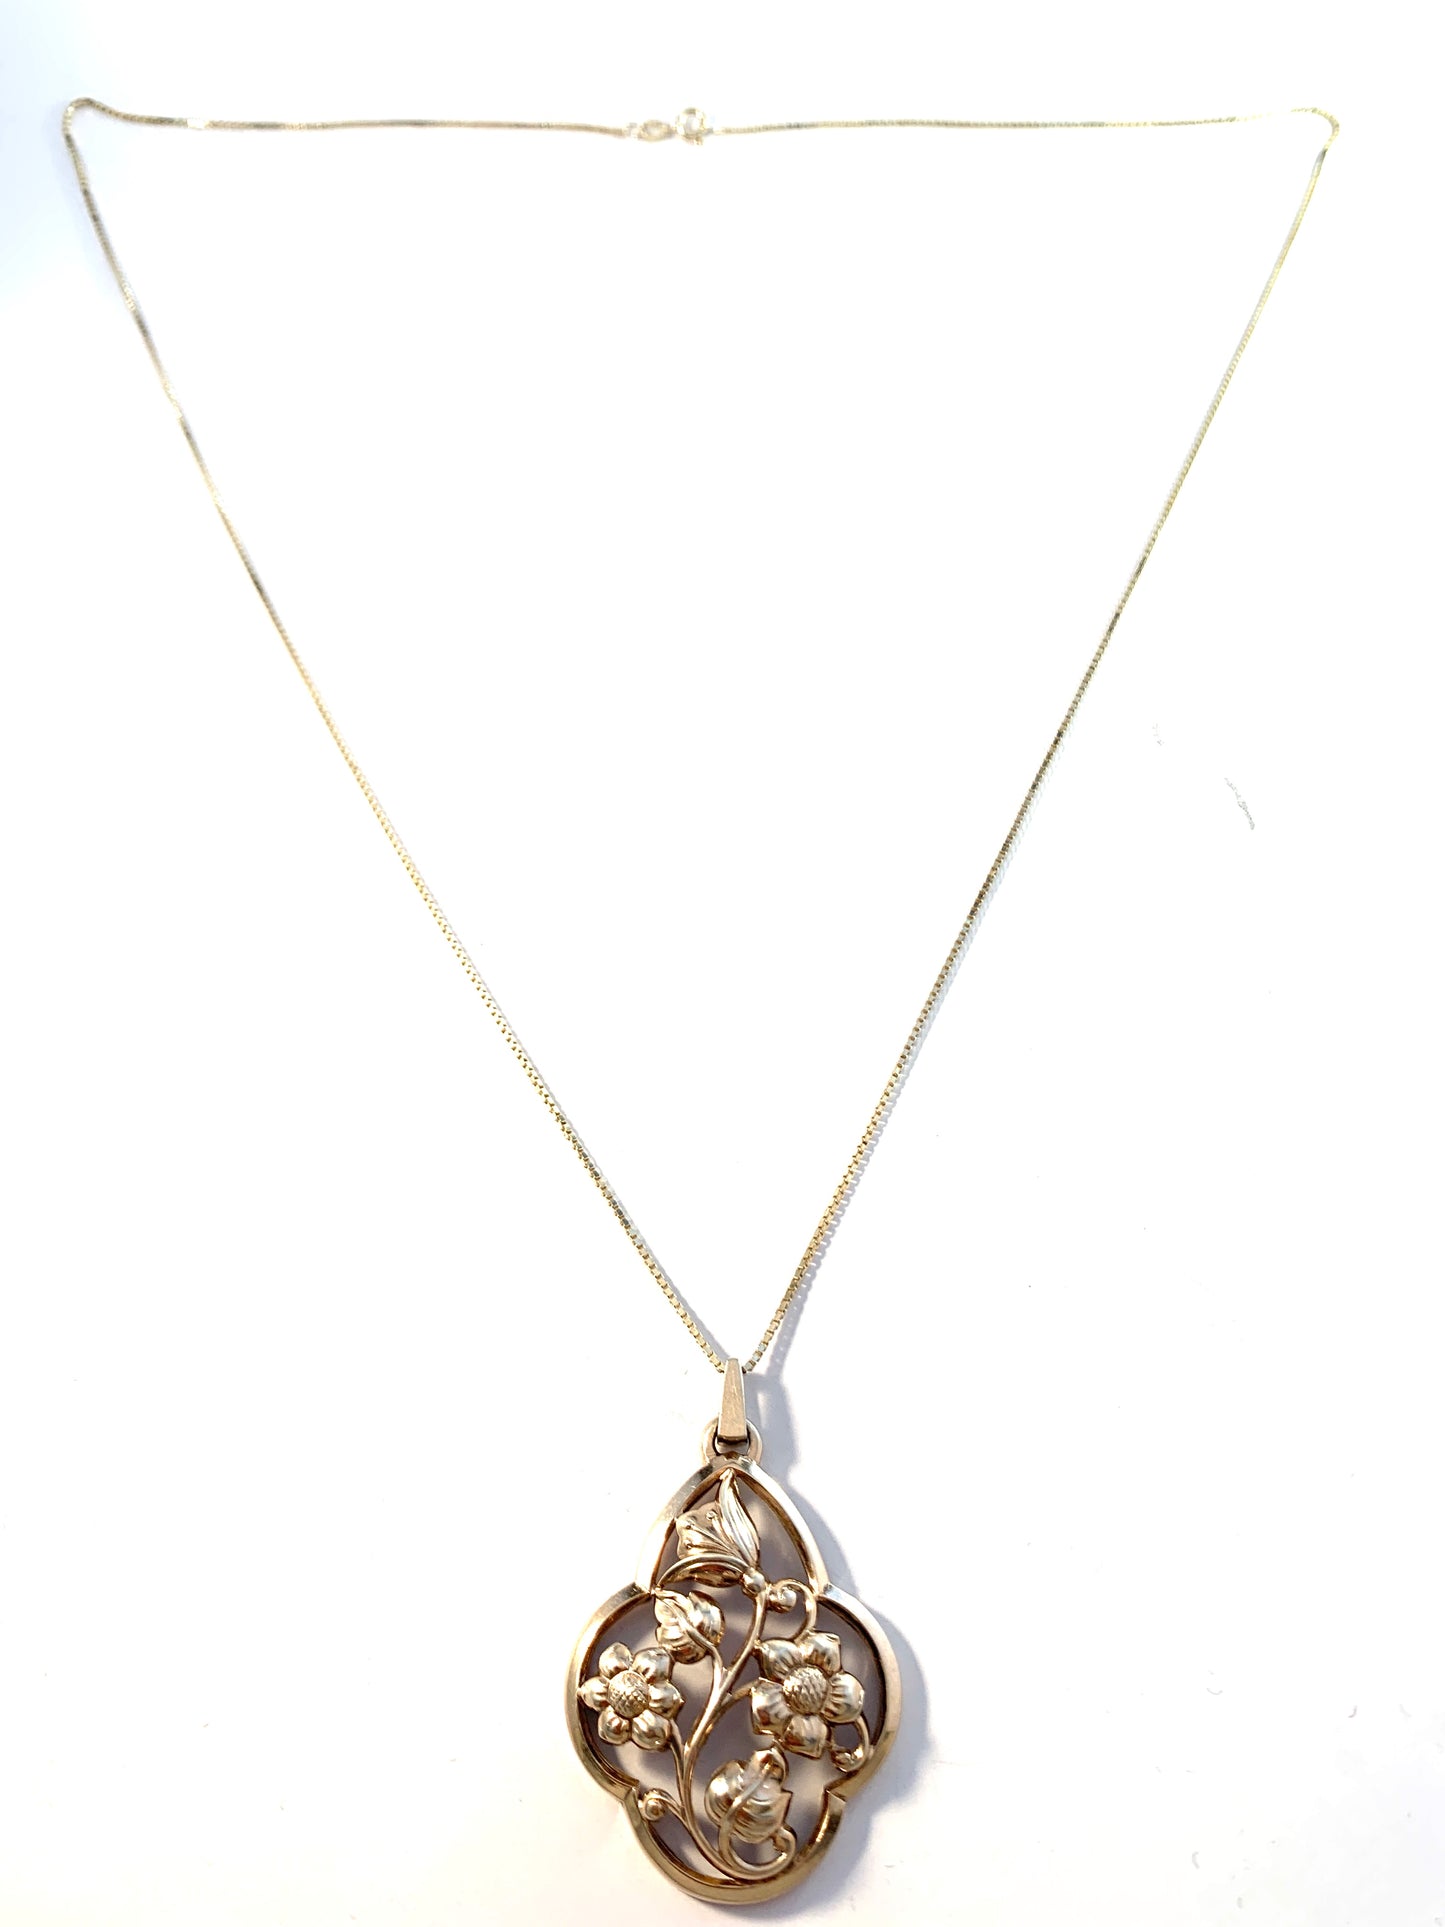 G Dahlgren, Sweden 1945. Gilt Sterling Silver Pendant Long Chain Necklace.